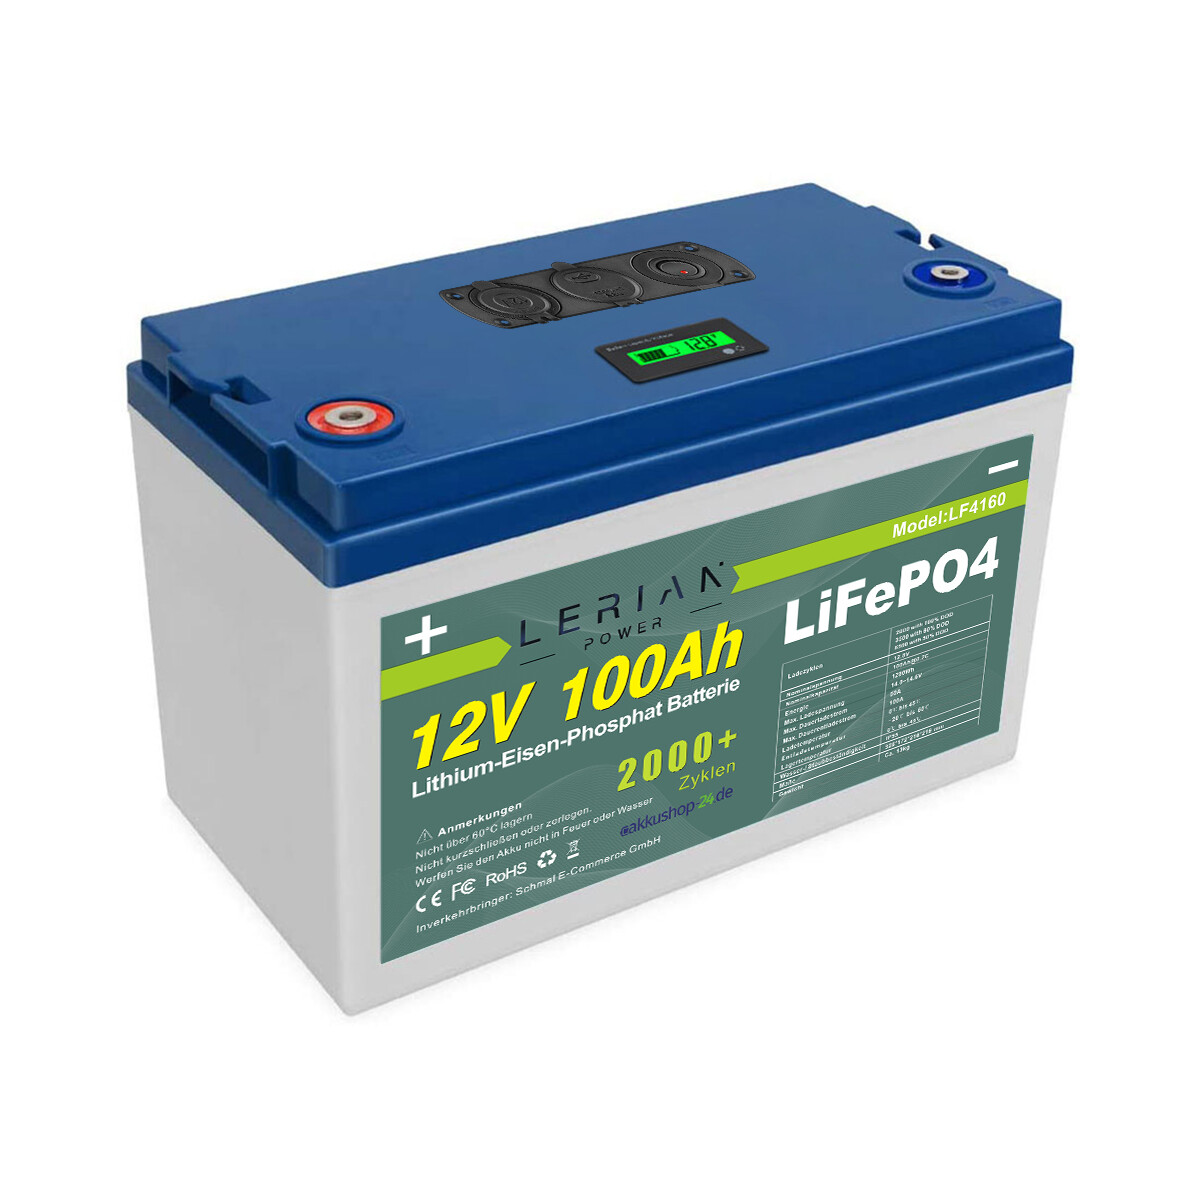 LiFePO4 Akku12V 100Ah Lithium-Eisen-Phosphat Batterie, 679,00 €